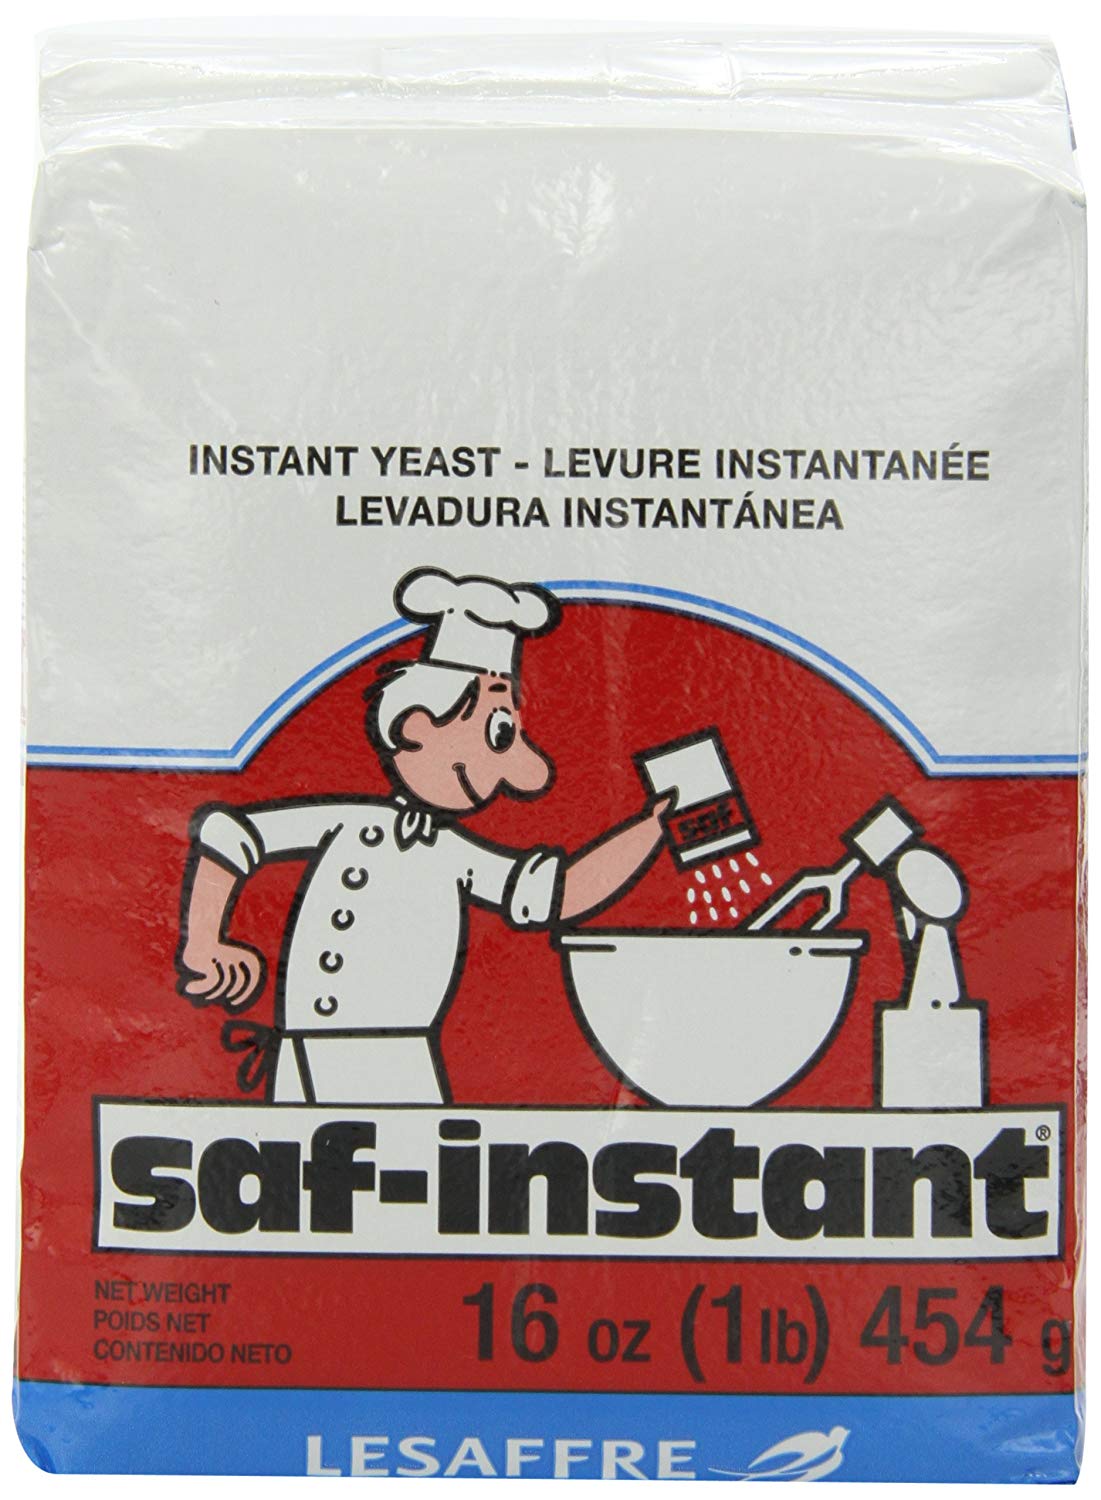 LeSaffre Saf Instant Yeasts & Leaveners, 16 Oz - image 1 of 7